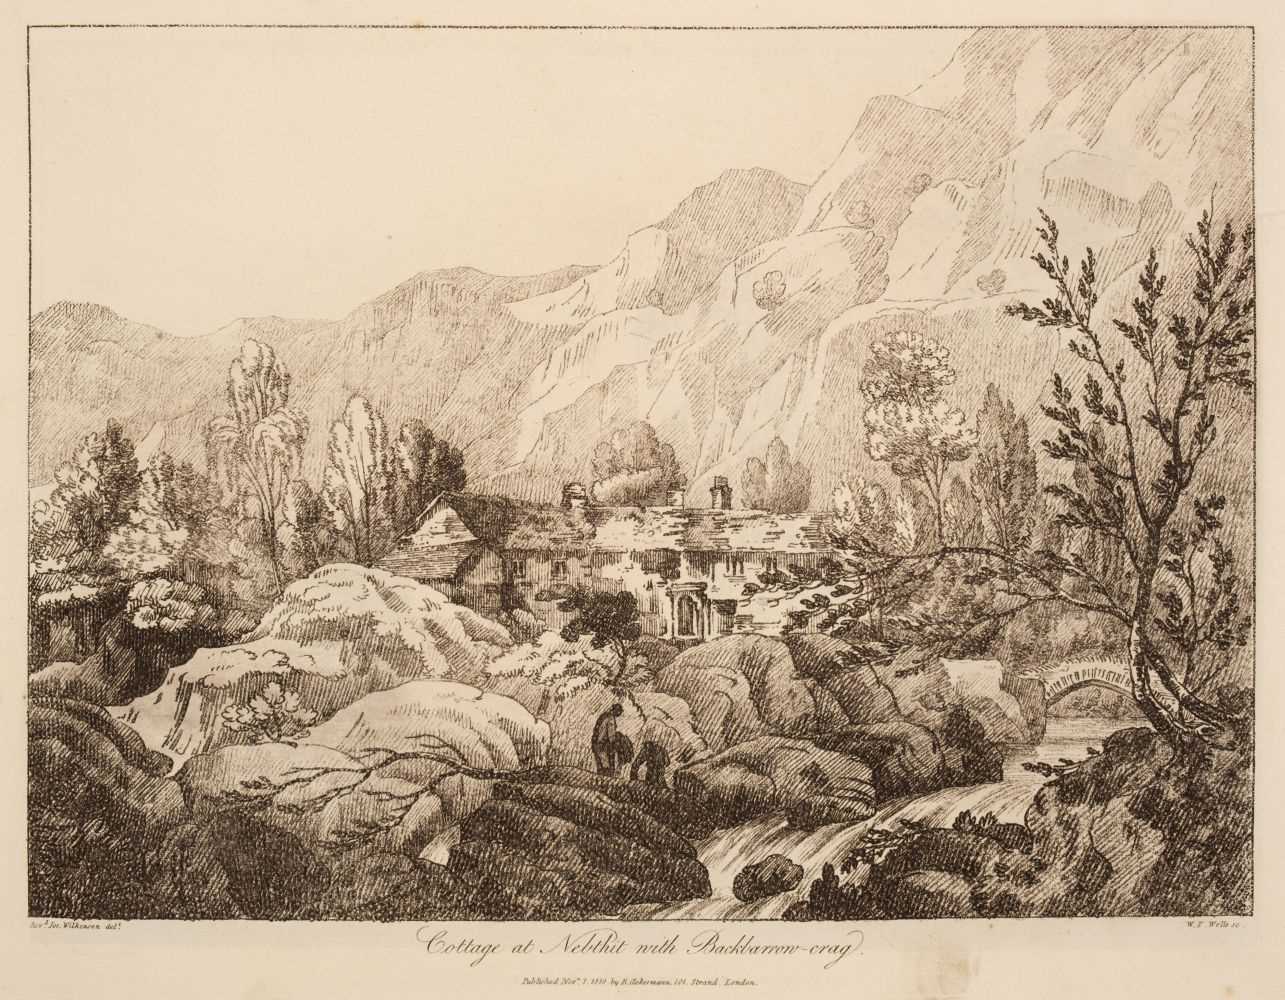 Lot 58 - Wilkinson (Rev Joseph). Select Views in Cumberland, London: R Ackermann, 1821